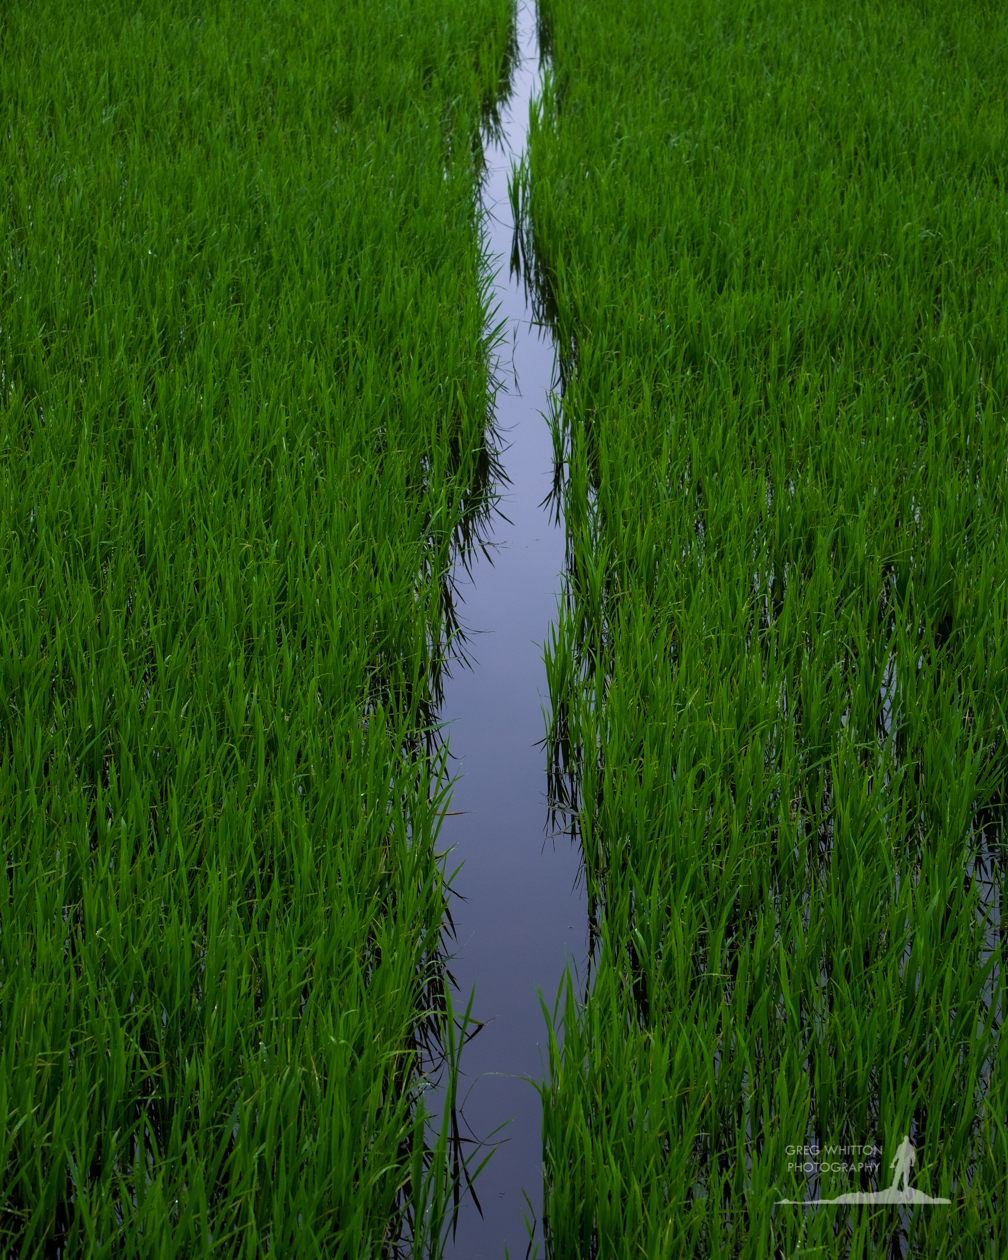 Landscape vietnam Rice asia Indochina fuji X-T1 hanoi saigon hoi an beach temple pagoda